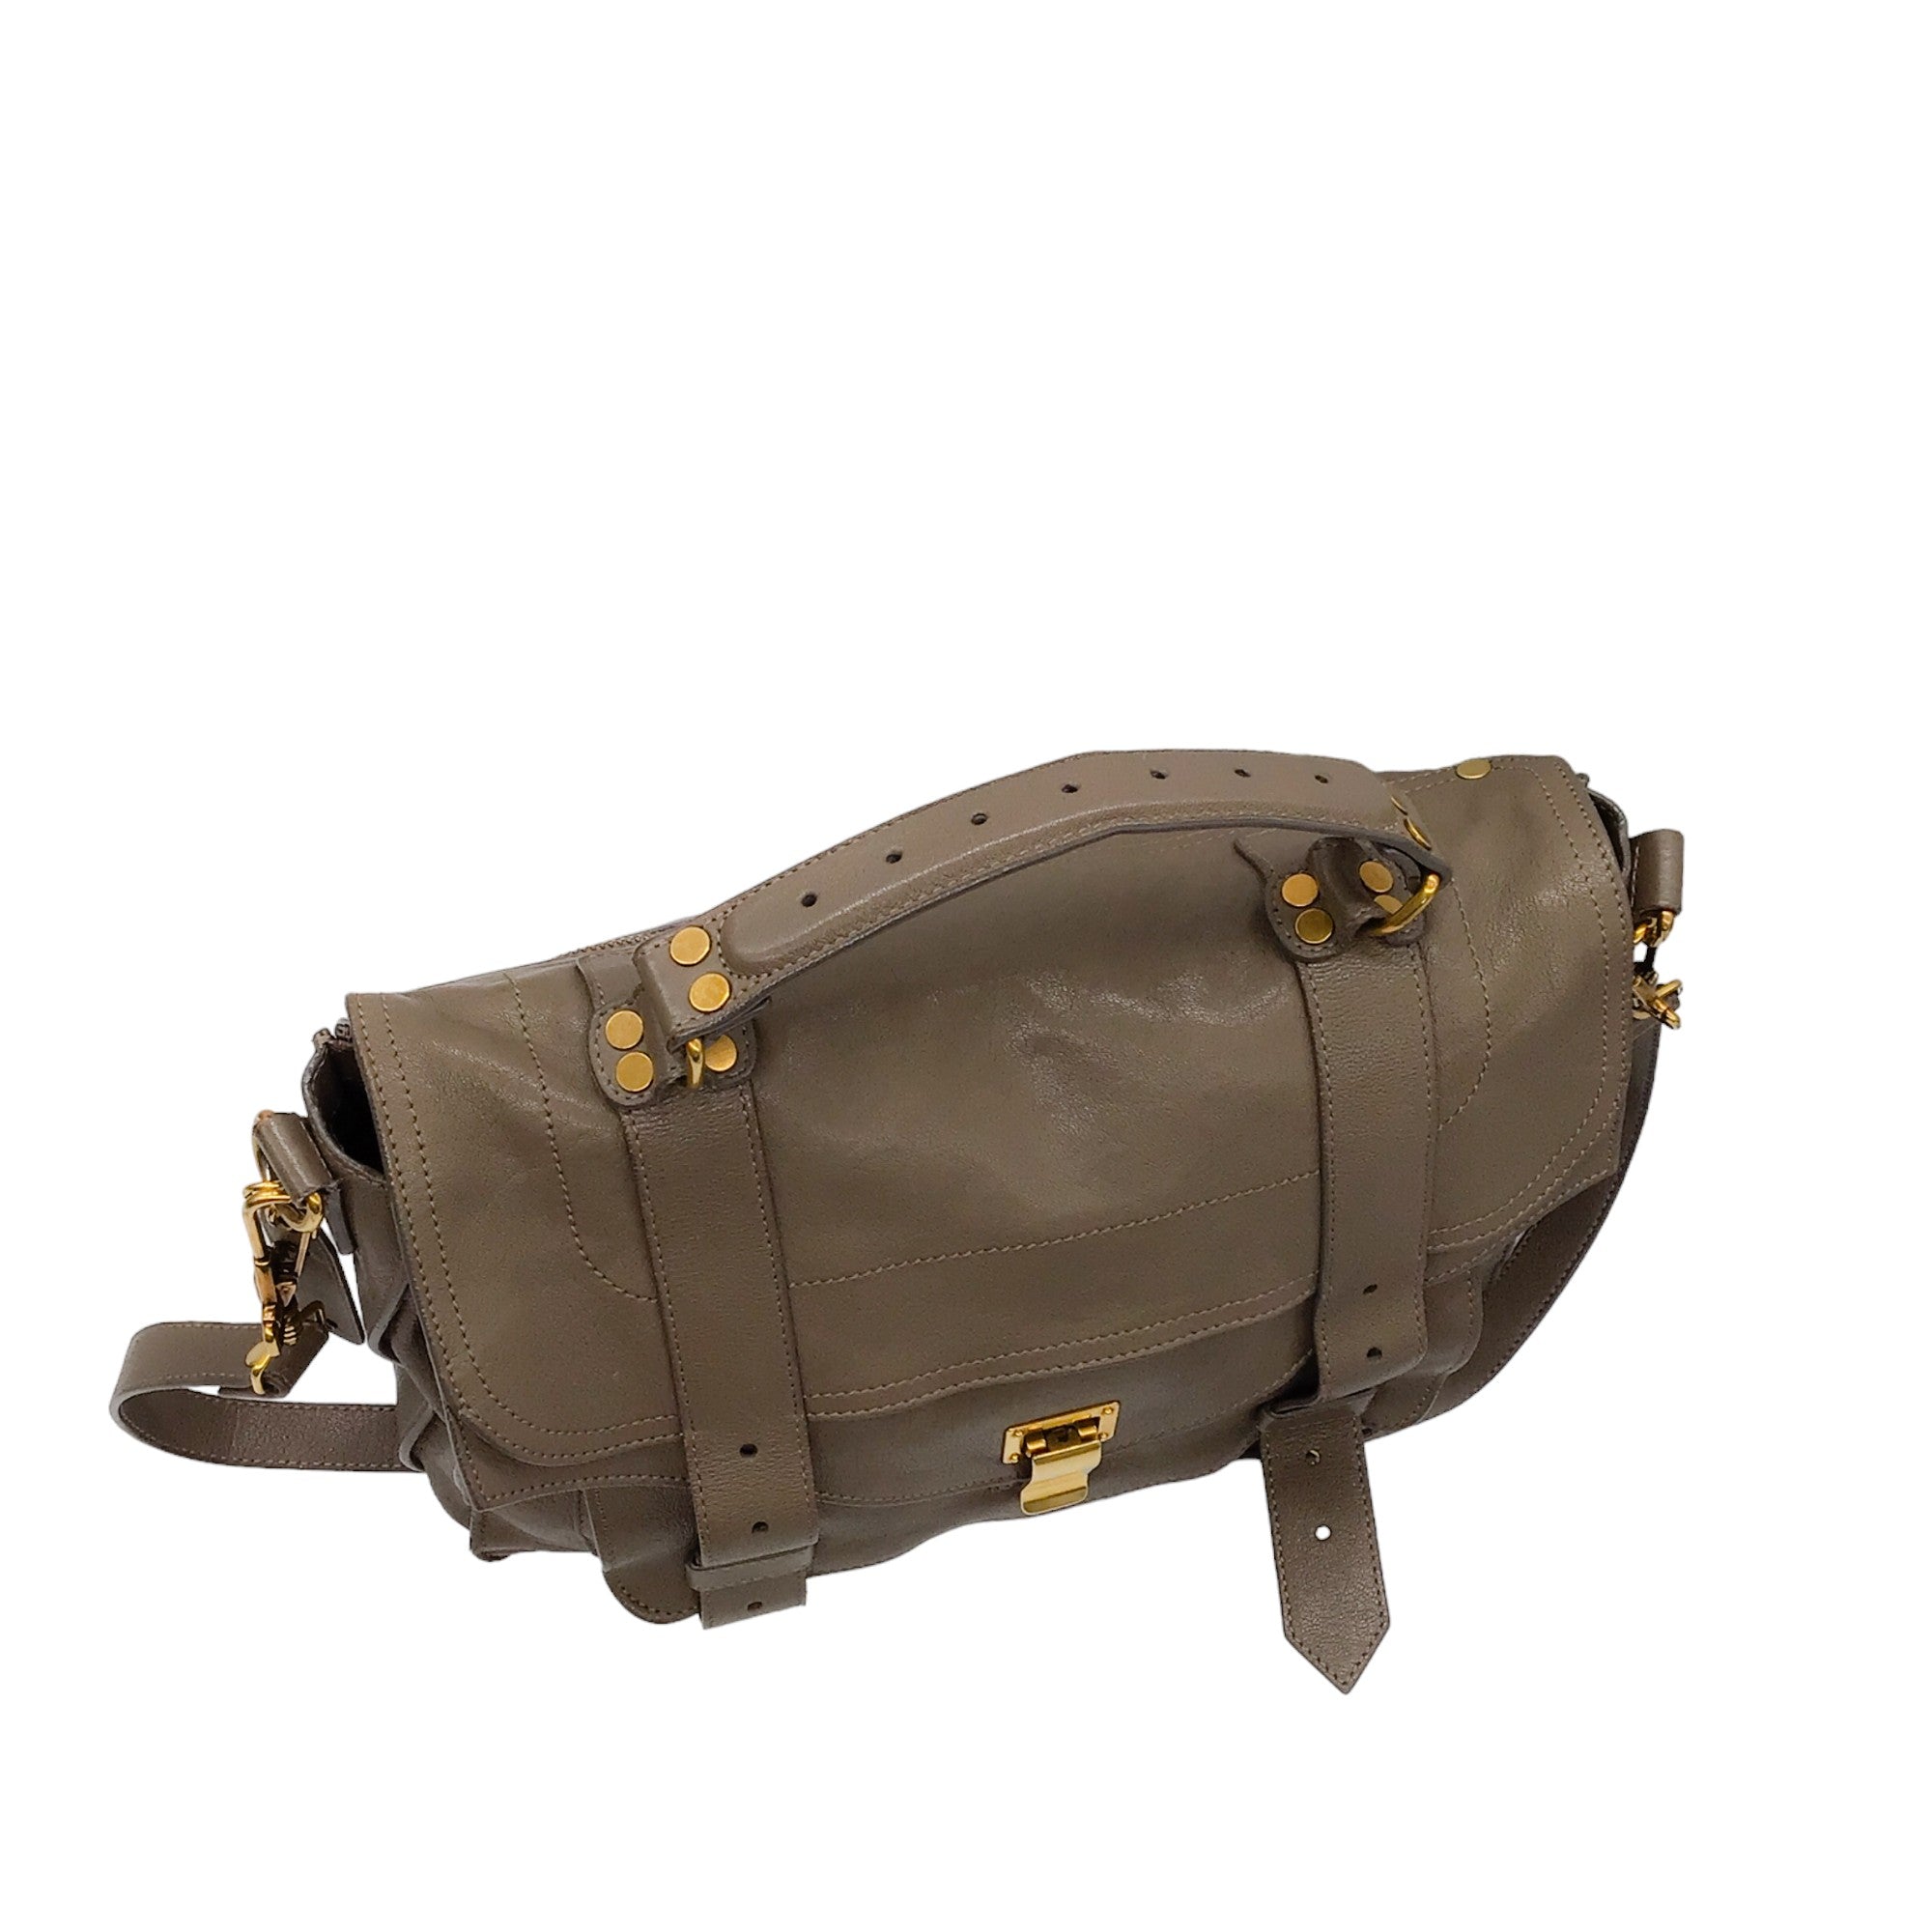 Proenza Schouler Taupe PS1 Leather Shoulder Bag